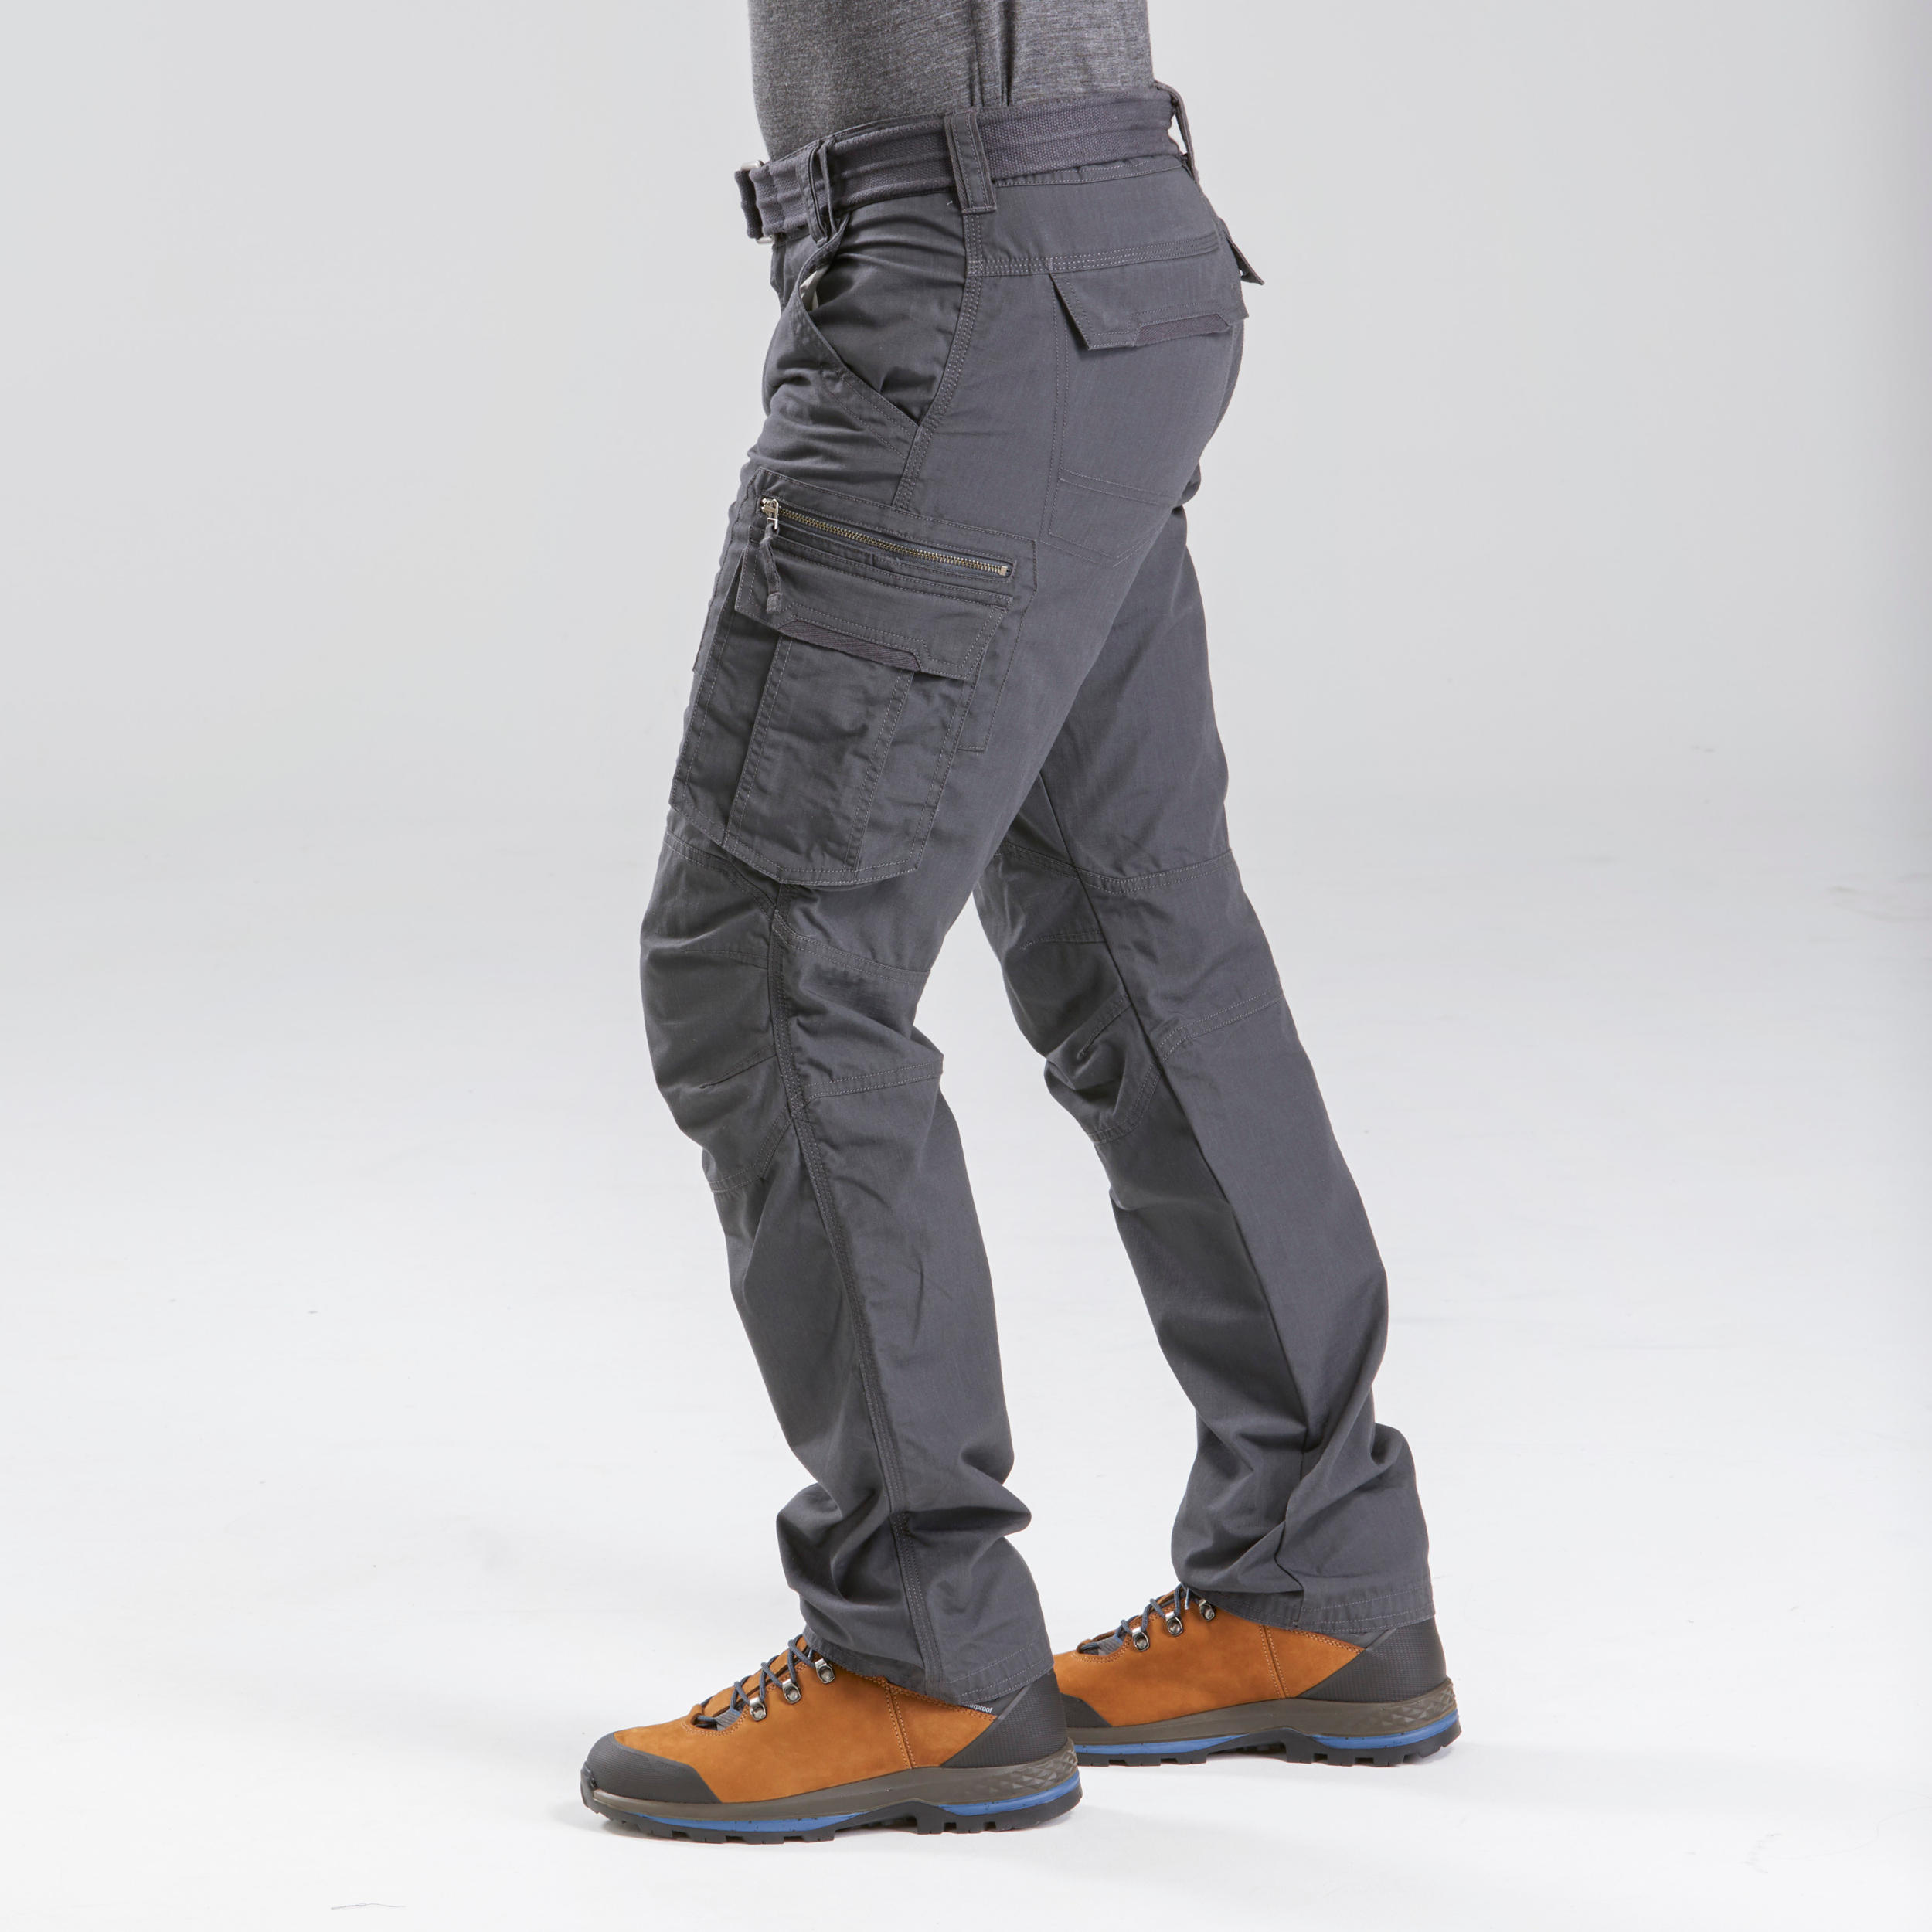 Travel 100 hiking cargo pants - Men - Carbon grey - Forclaz - Decathlon